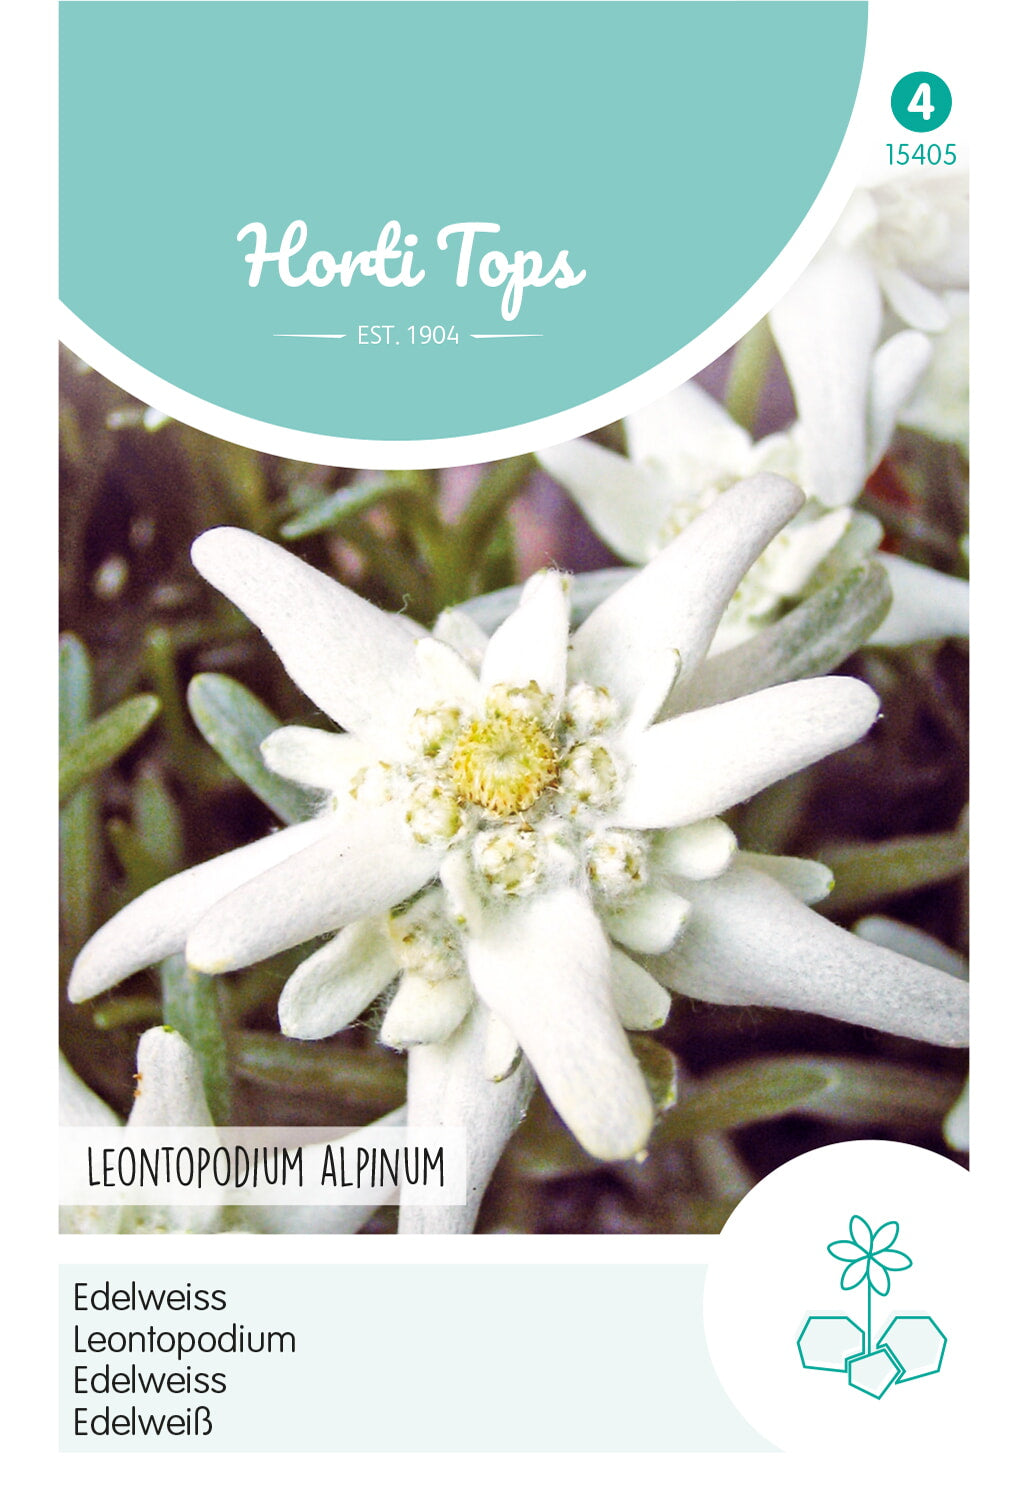 HT Leontopodium alpinum, Edelweiss